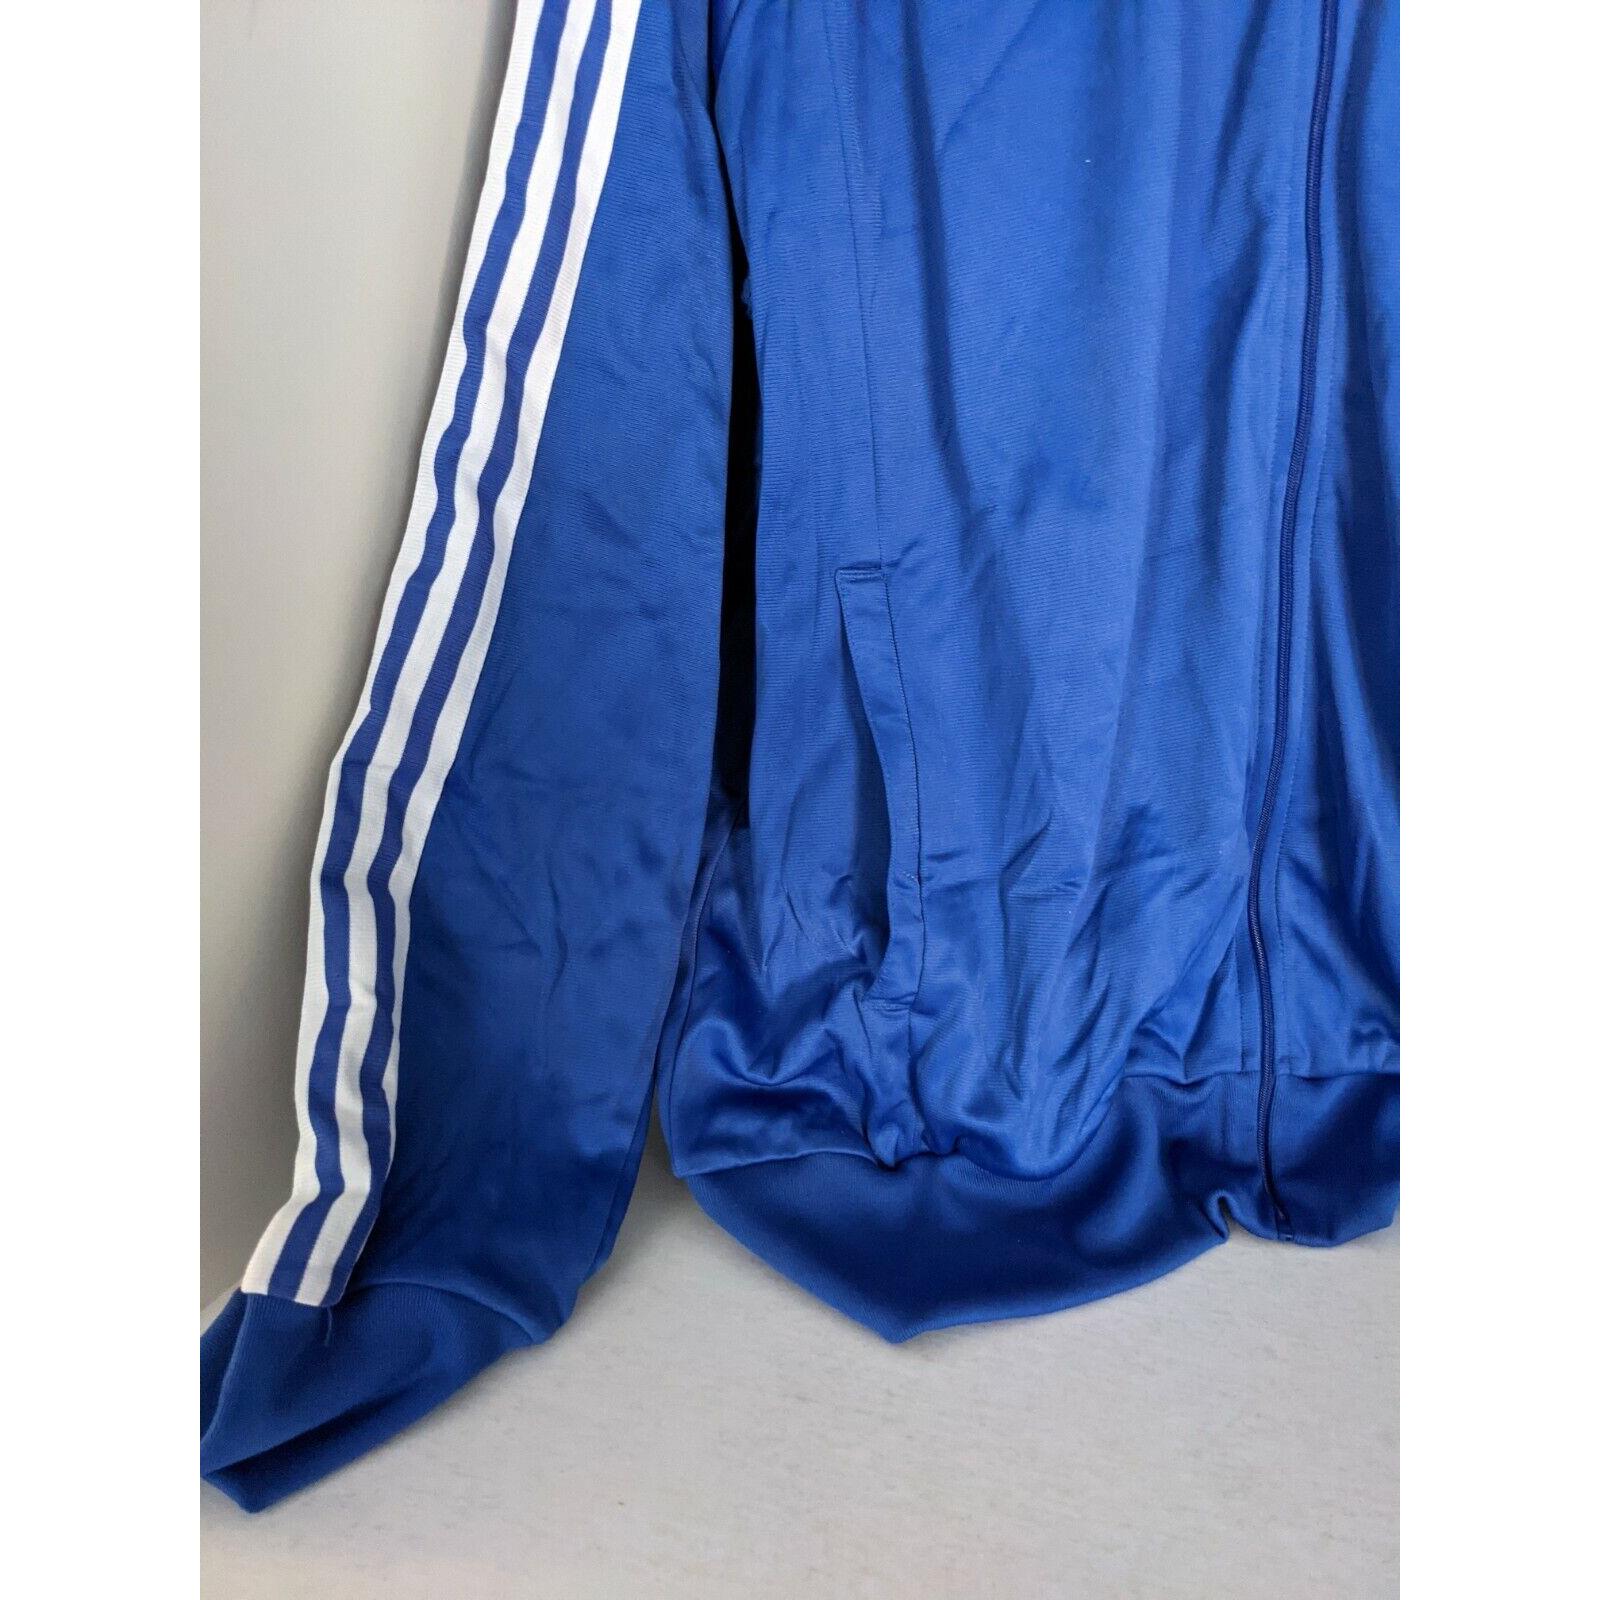 Adidas clothing USA - Blue 4